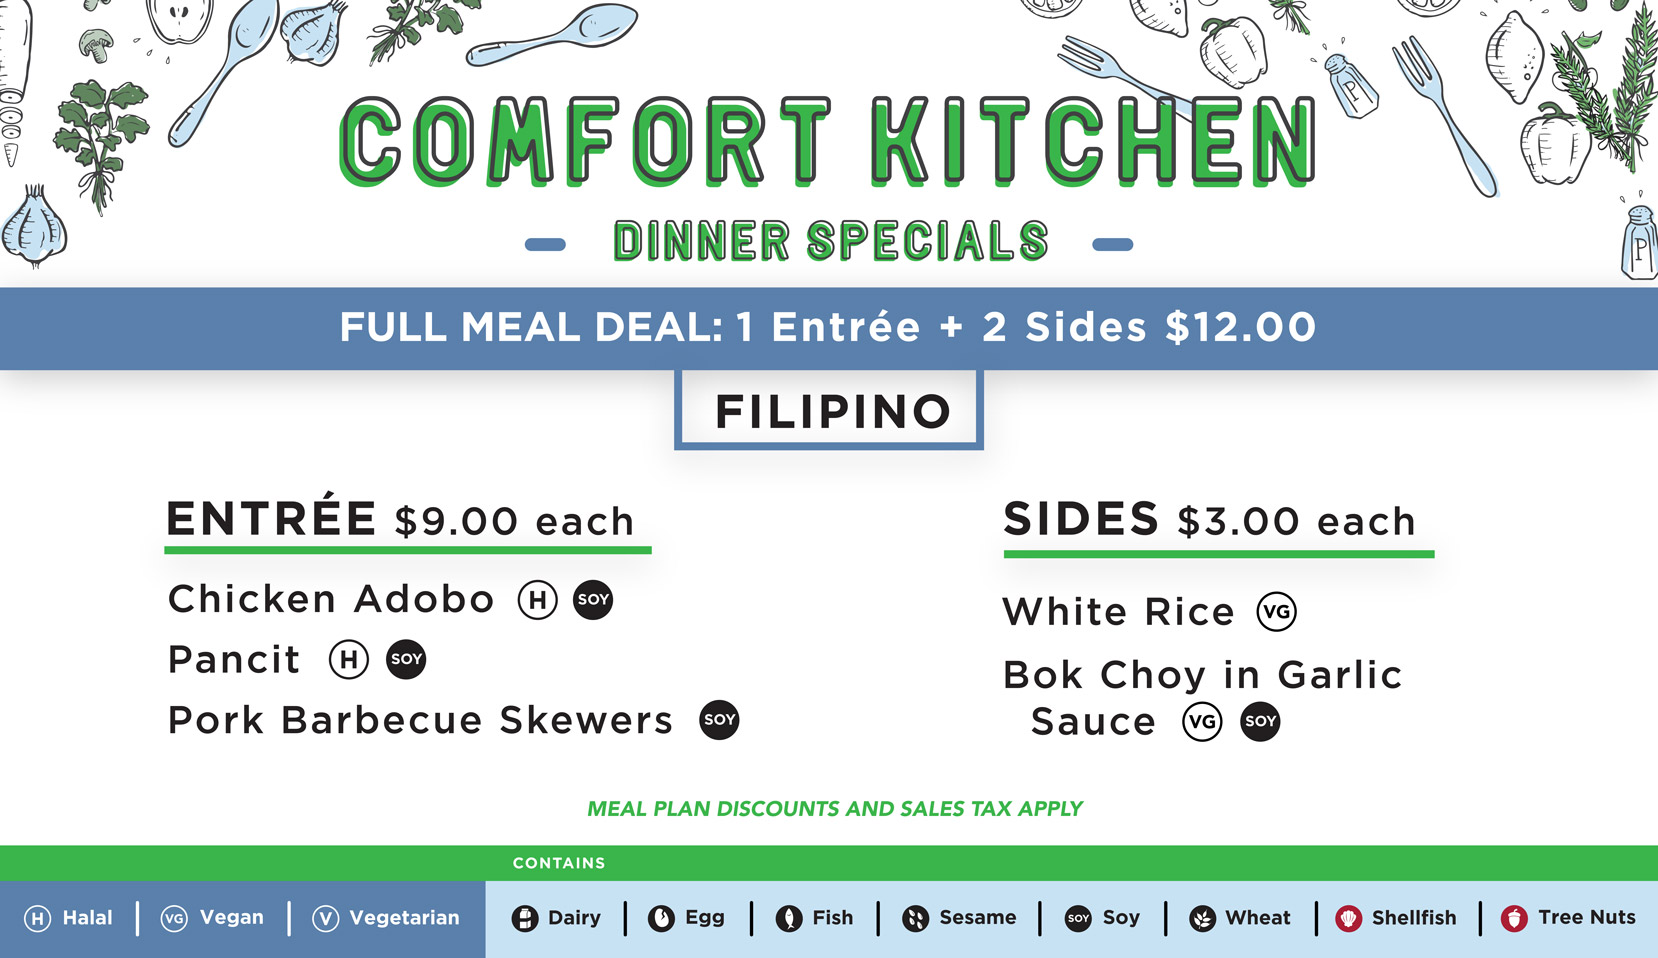 Comfort Kitchen Filipino Menu